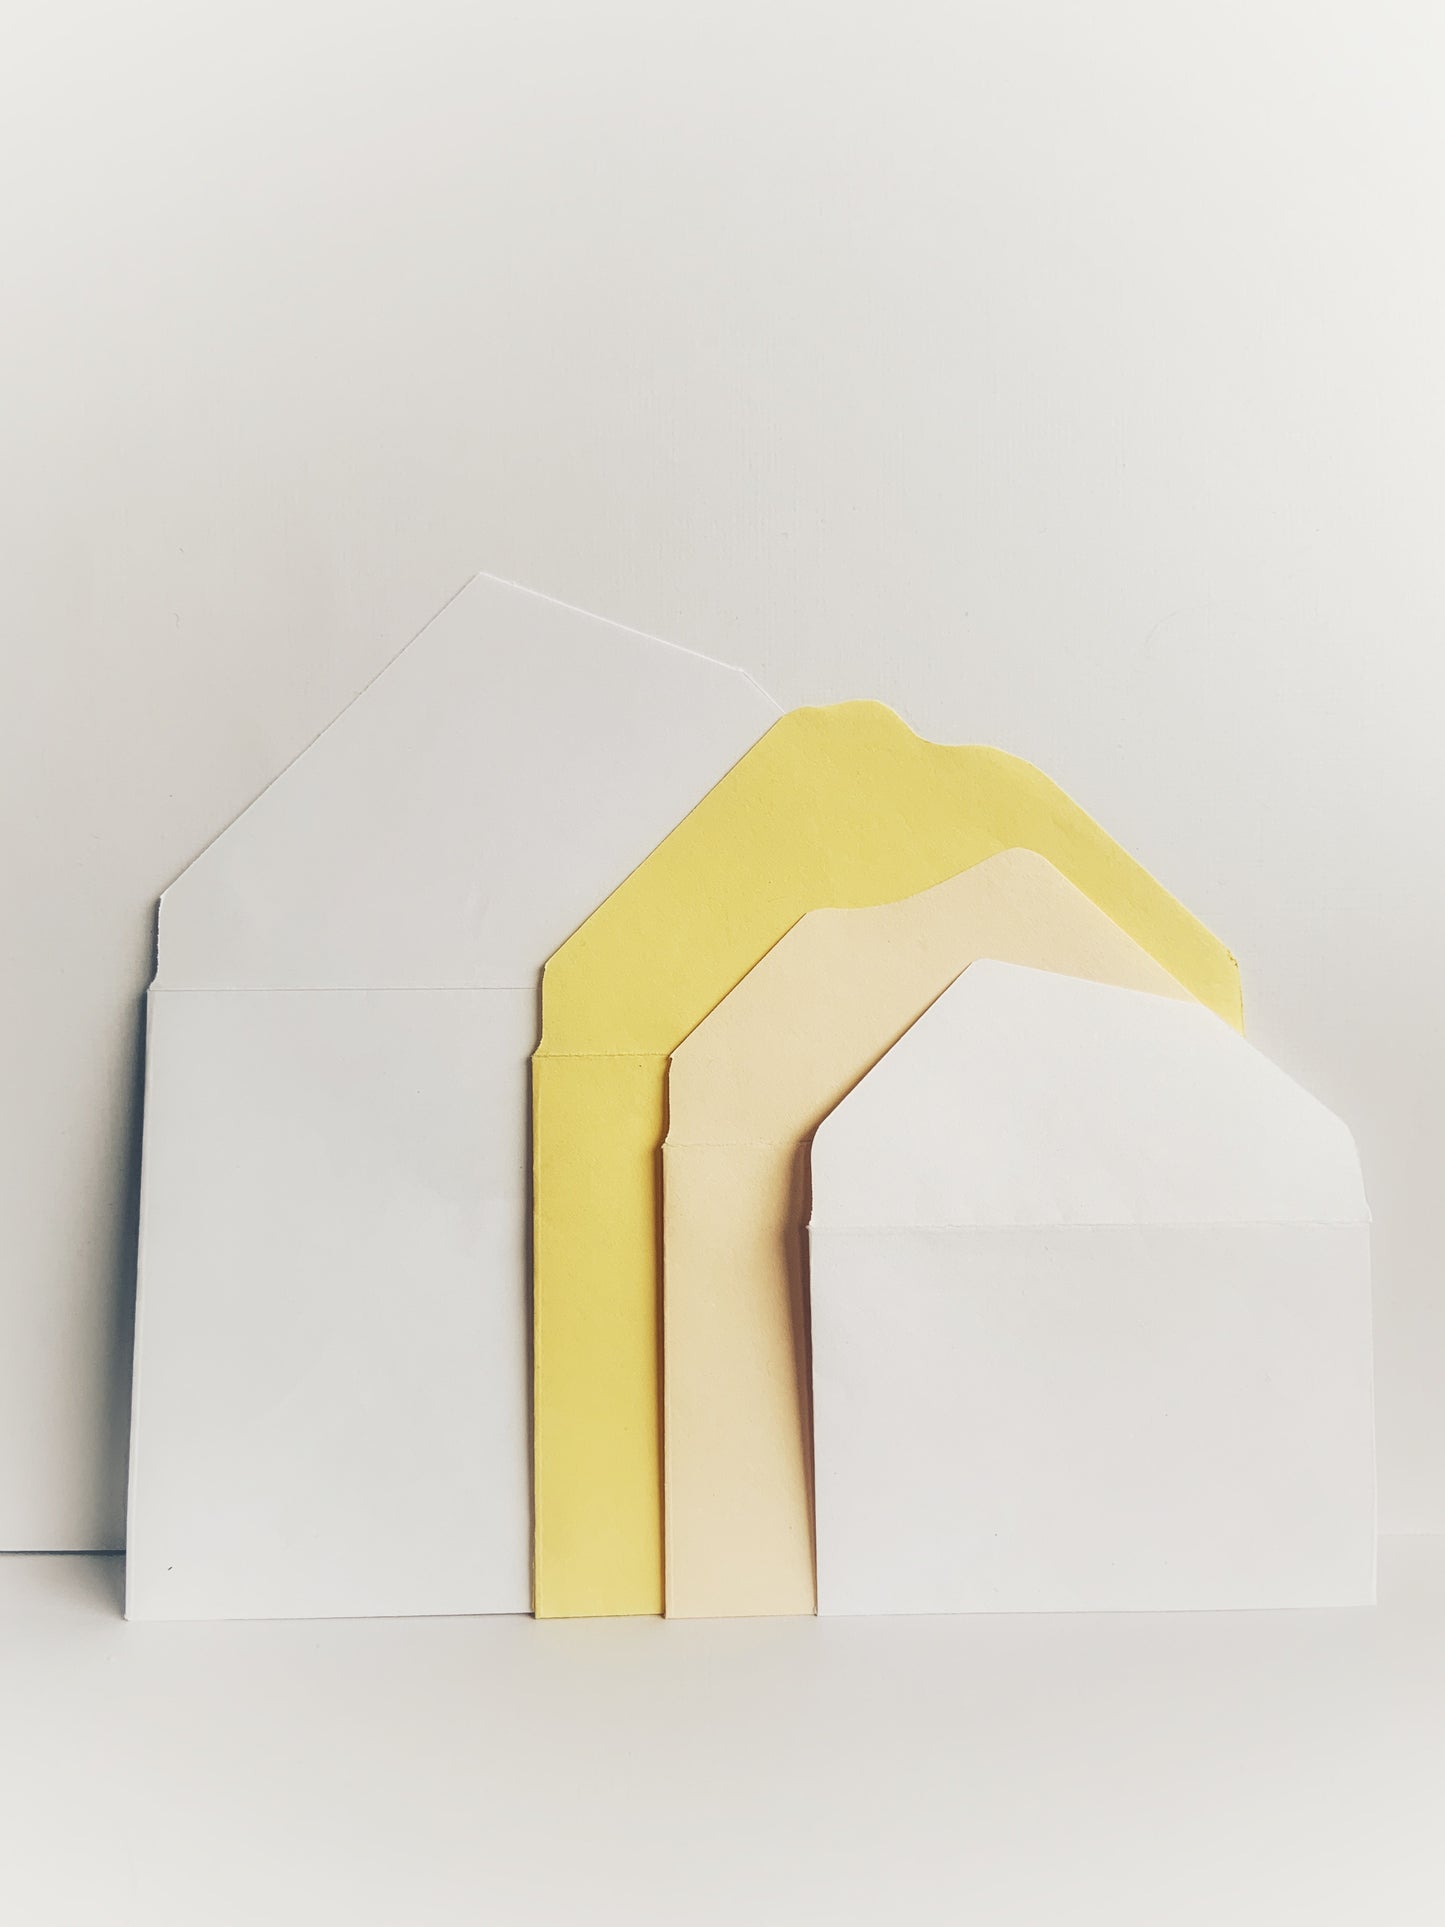 Handmade nesting envelopes in plain white and yellow showing custom flaps